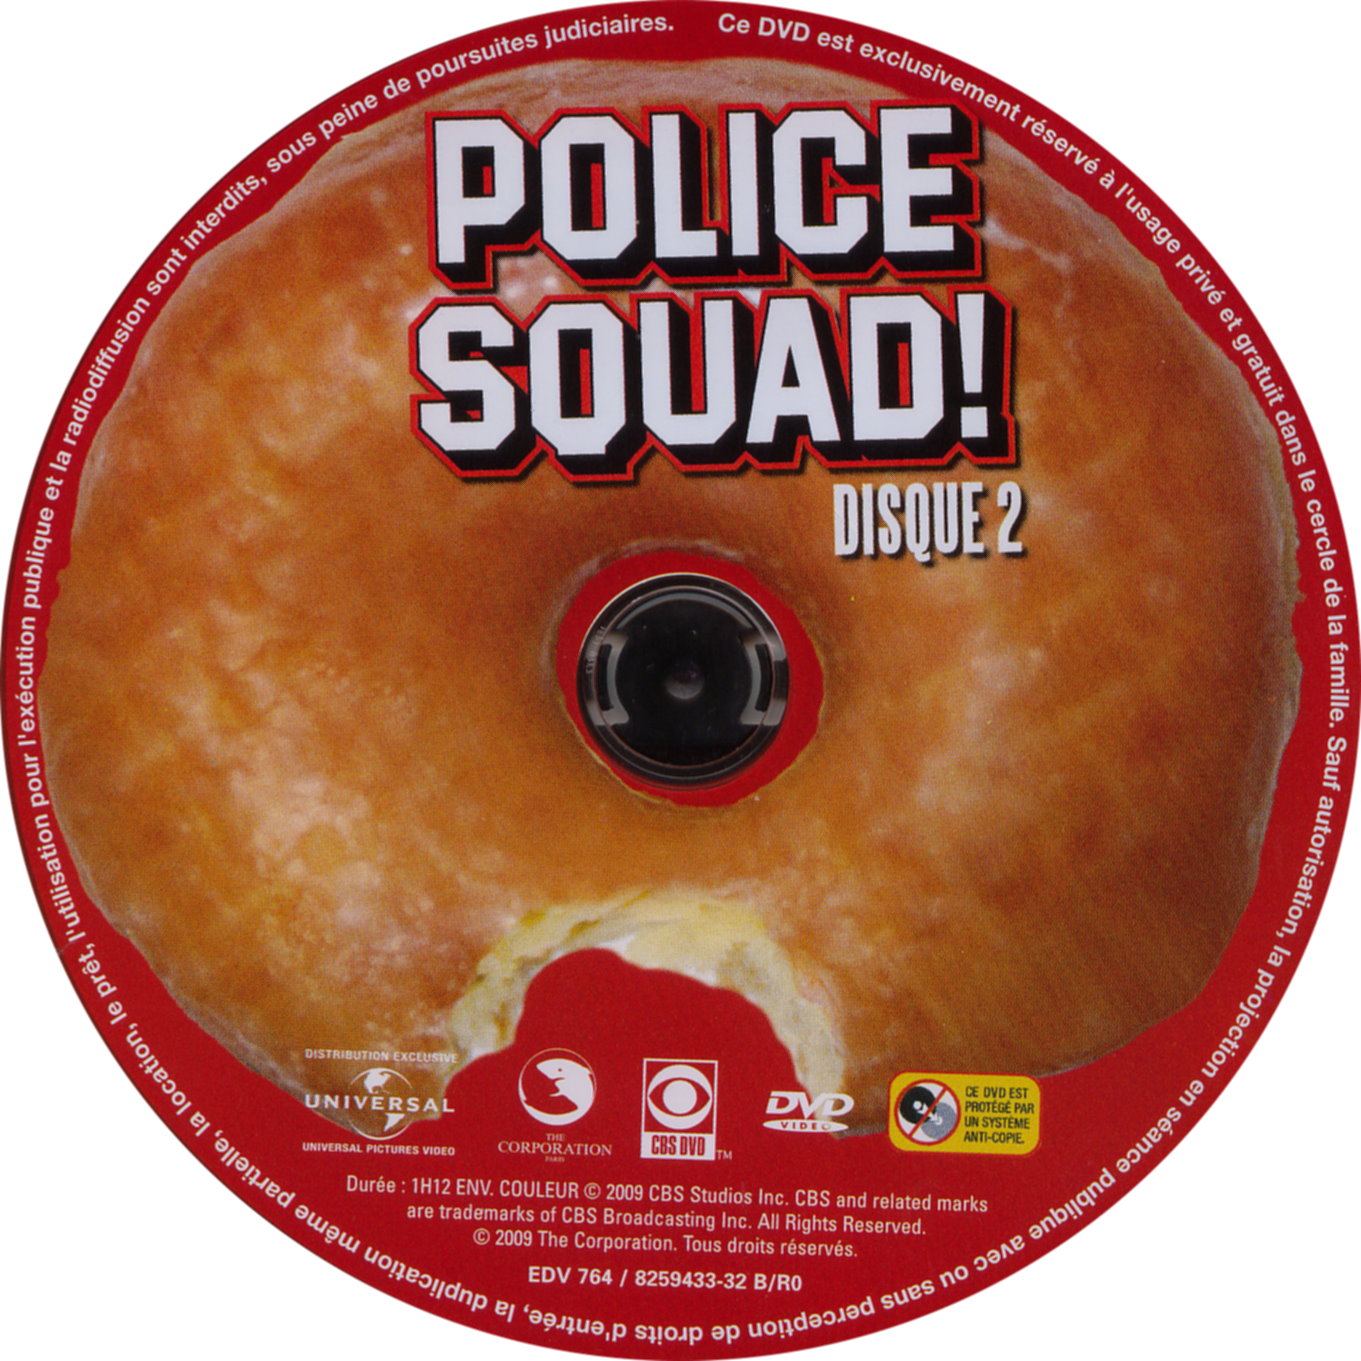 Police squad DISC 2